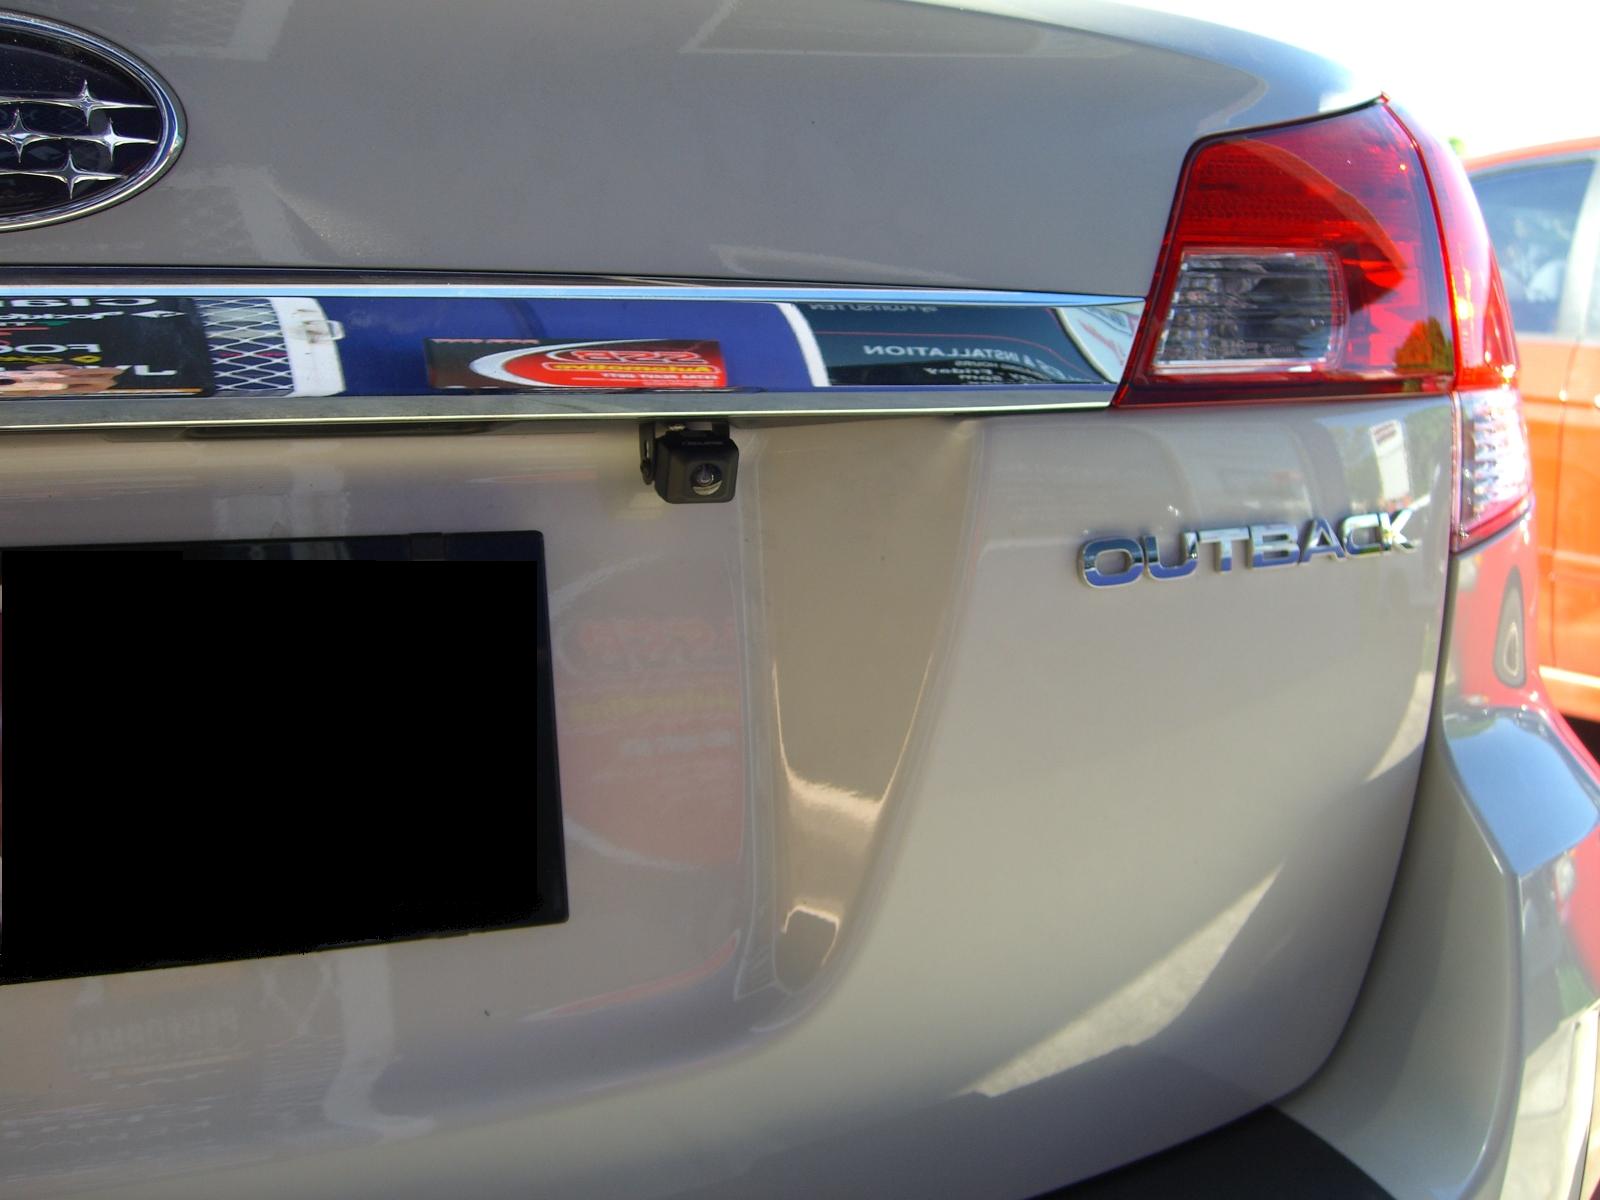 Subaru Outback 2010 Eclipse GPS Navigation reverse camera system